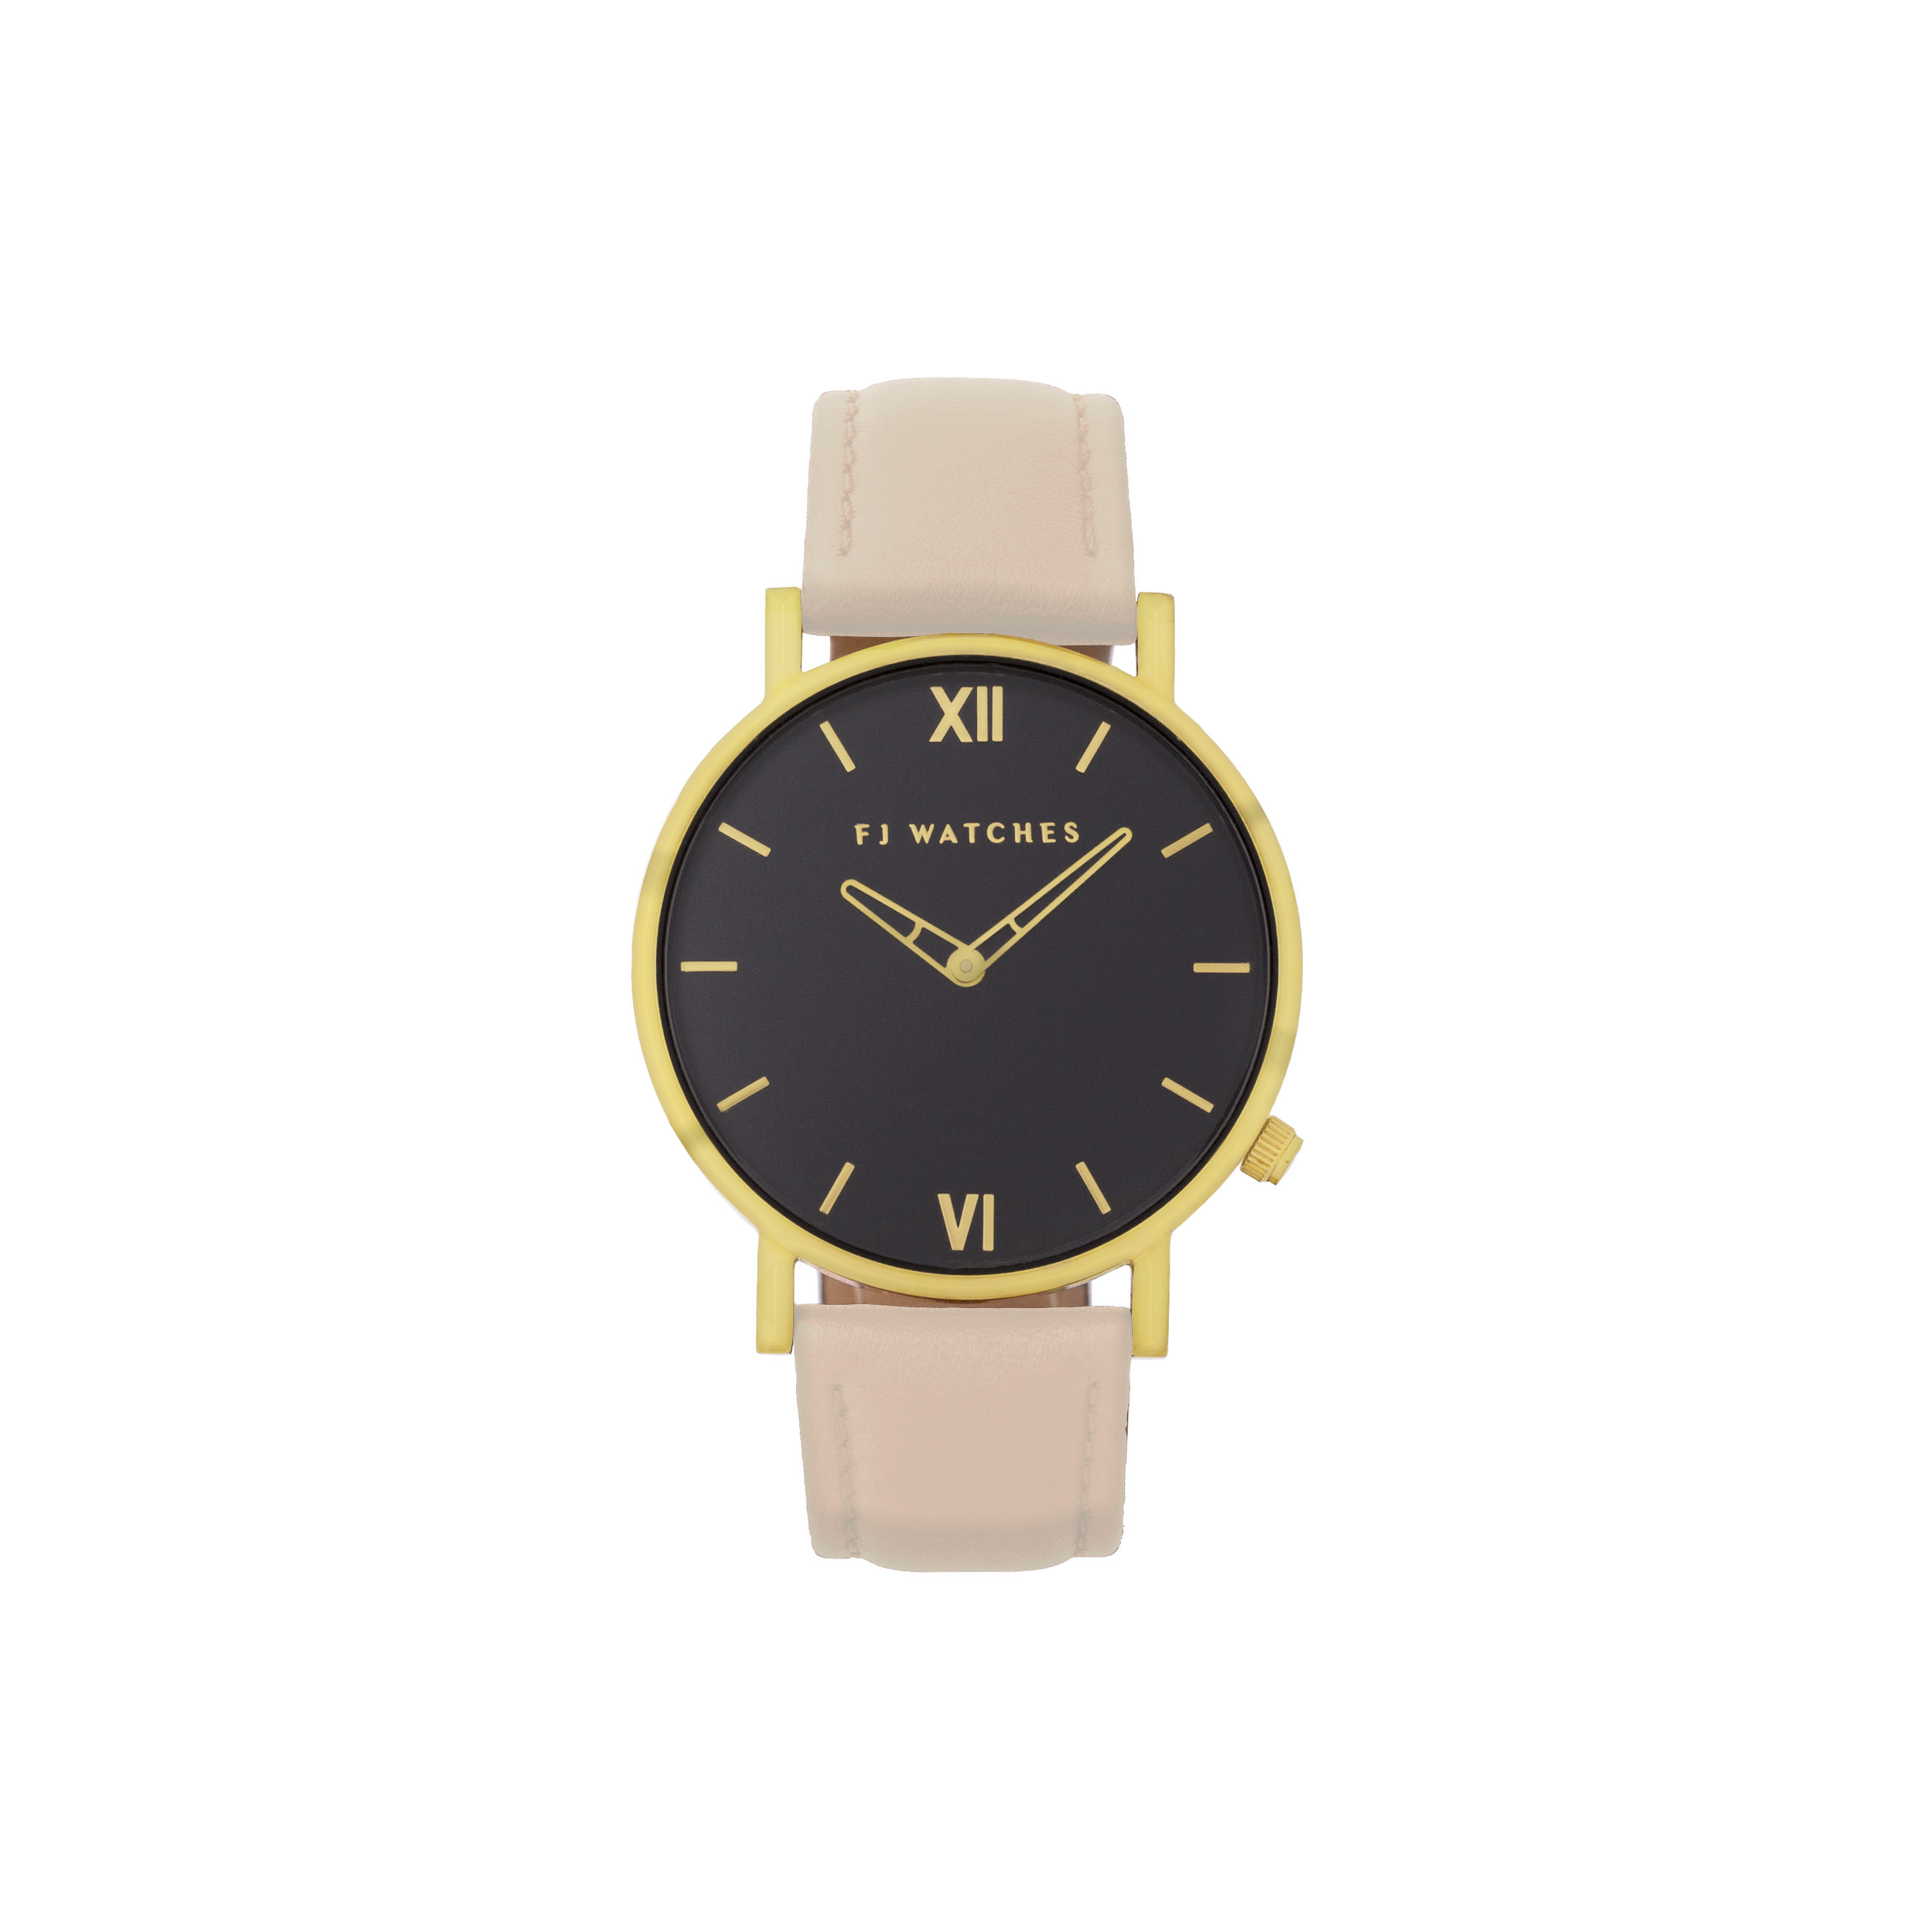 FJ Watches moonlight black gold women 36mm pinky beige leather strap watch minimalist